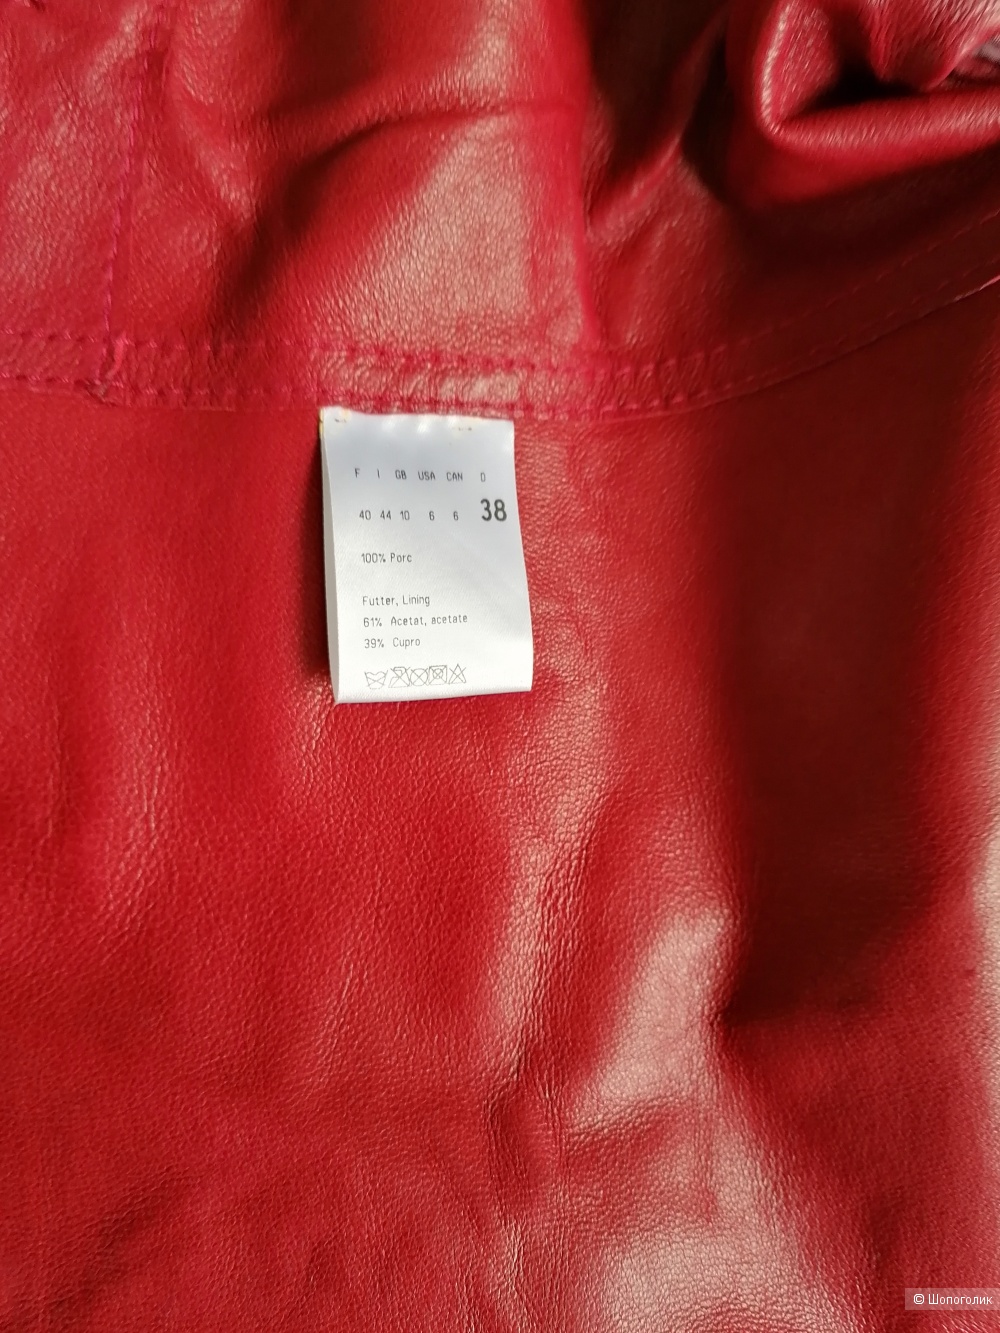 Кожаный пиджак куртка Strenesse размер 44-46